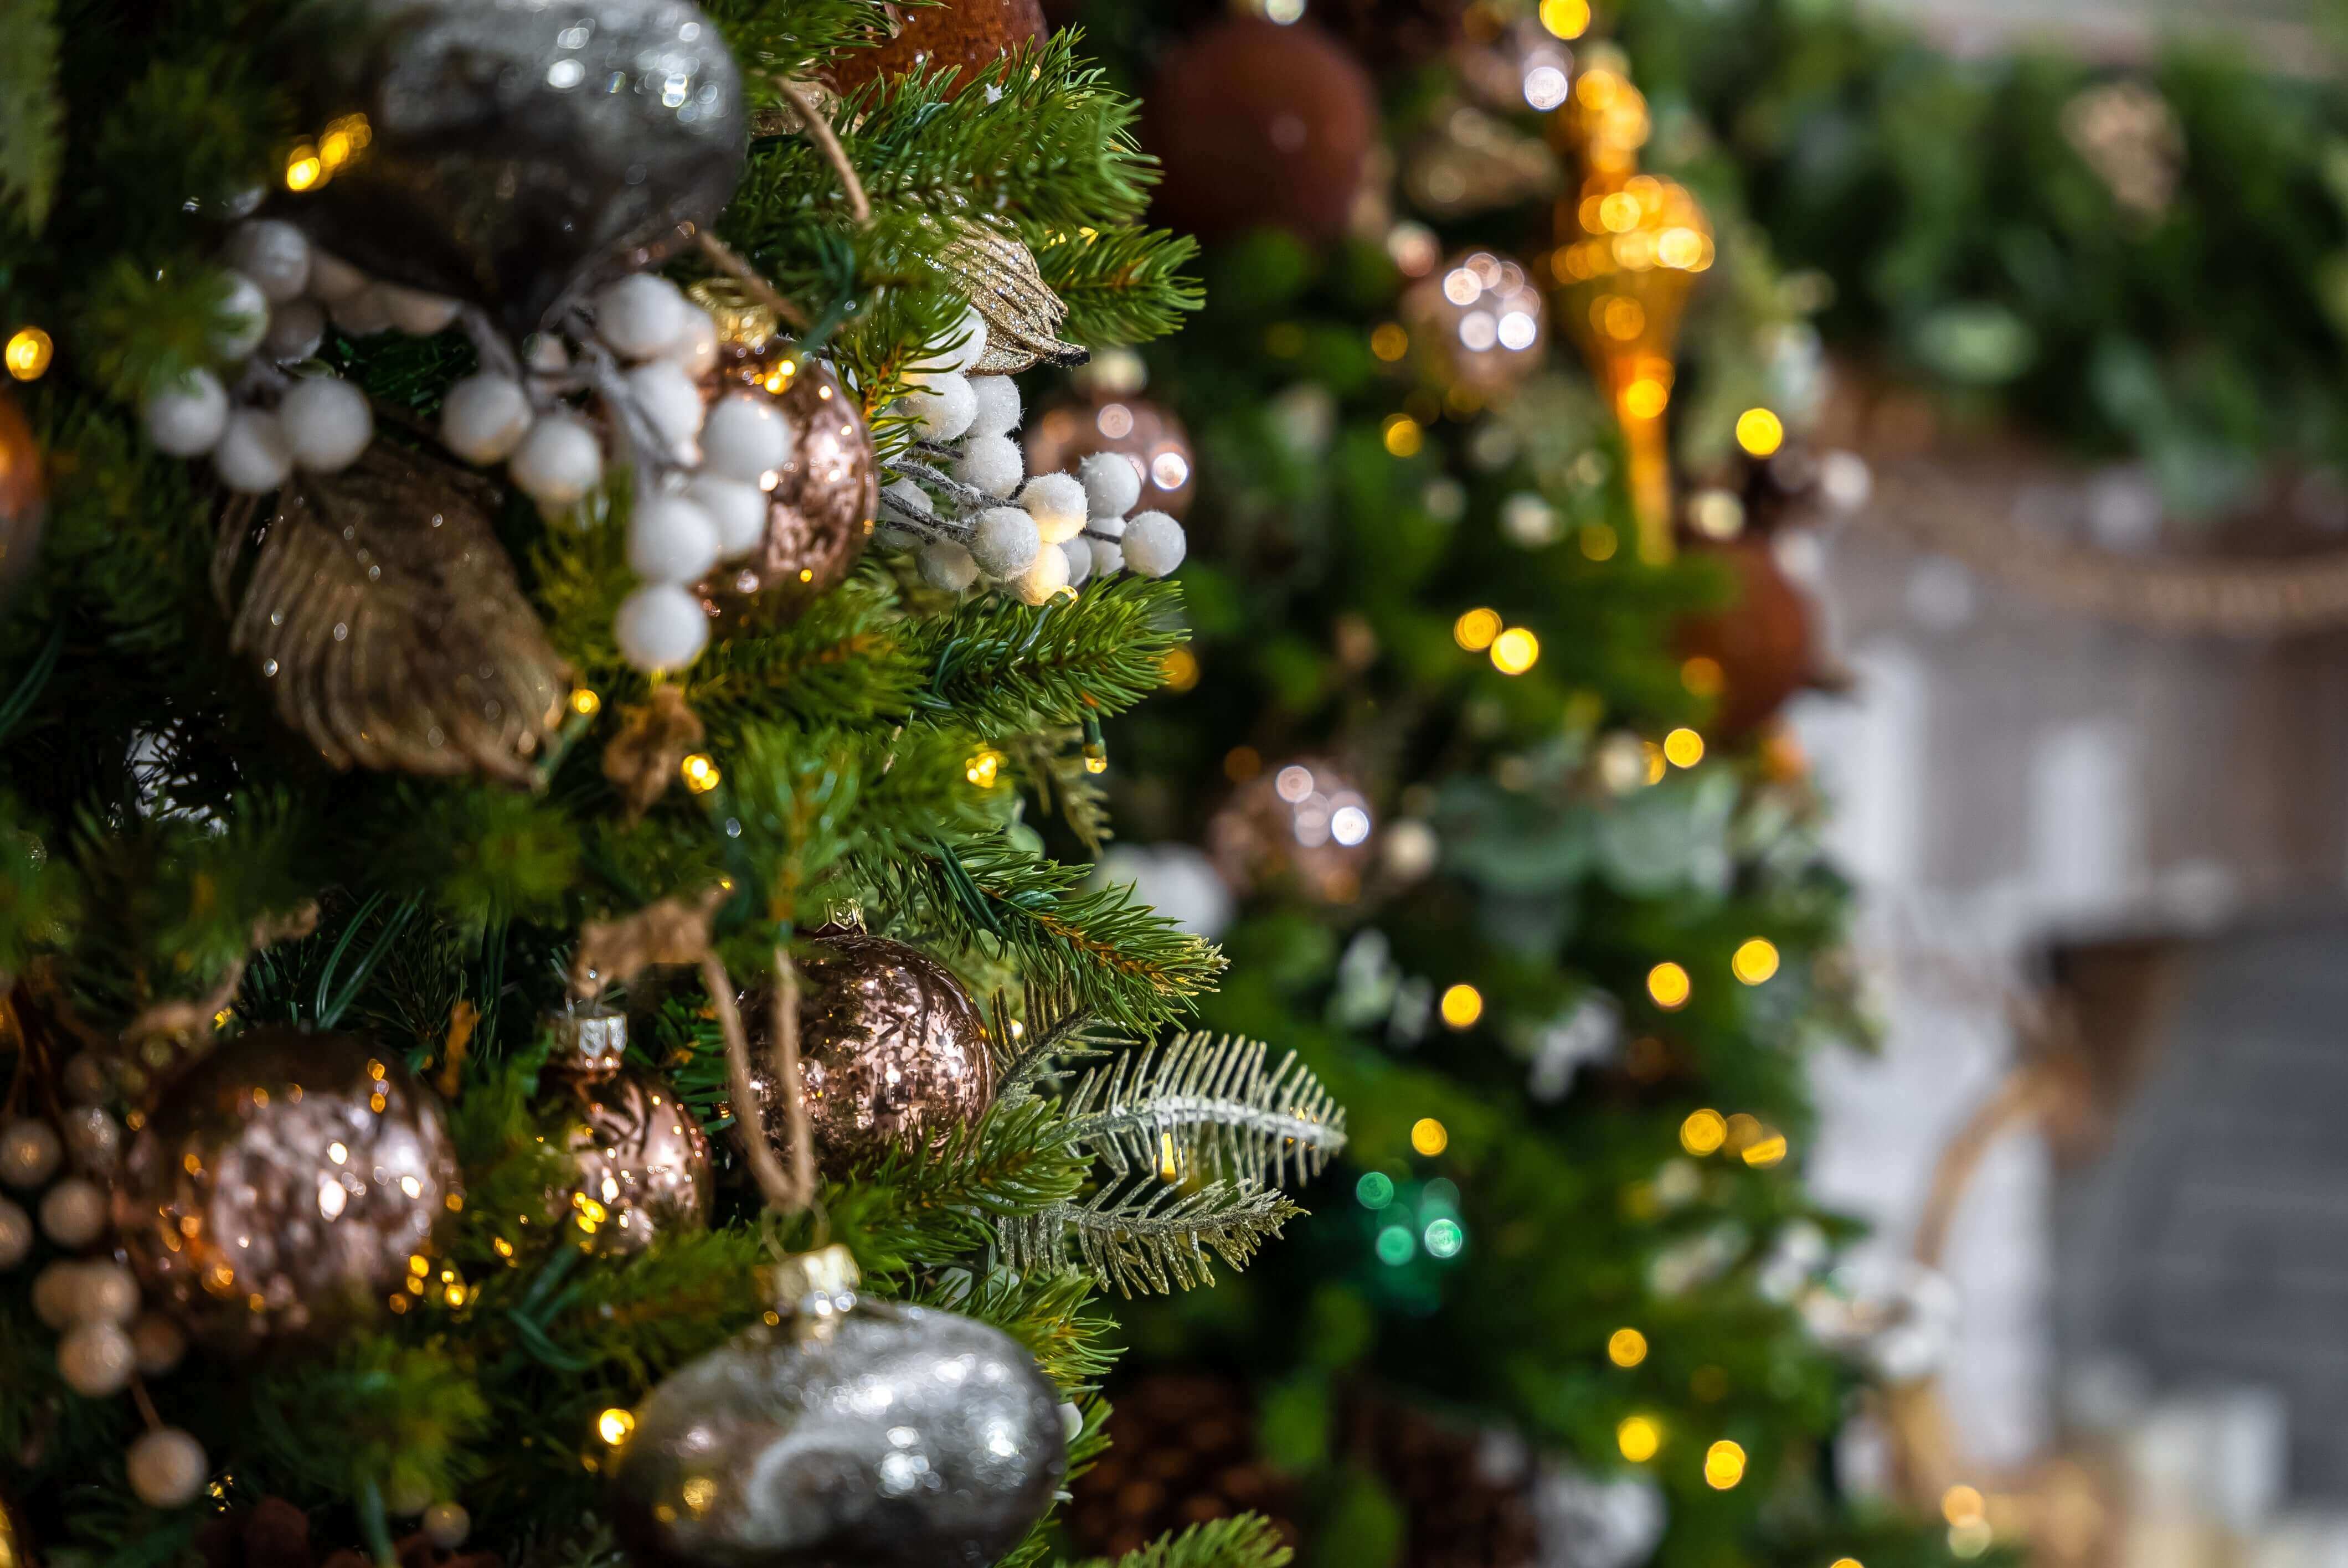 King of Christmas 10' King Fraser Fir Slim Quick-Shape Artificial Christmas Tree Unlit